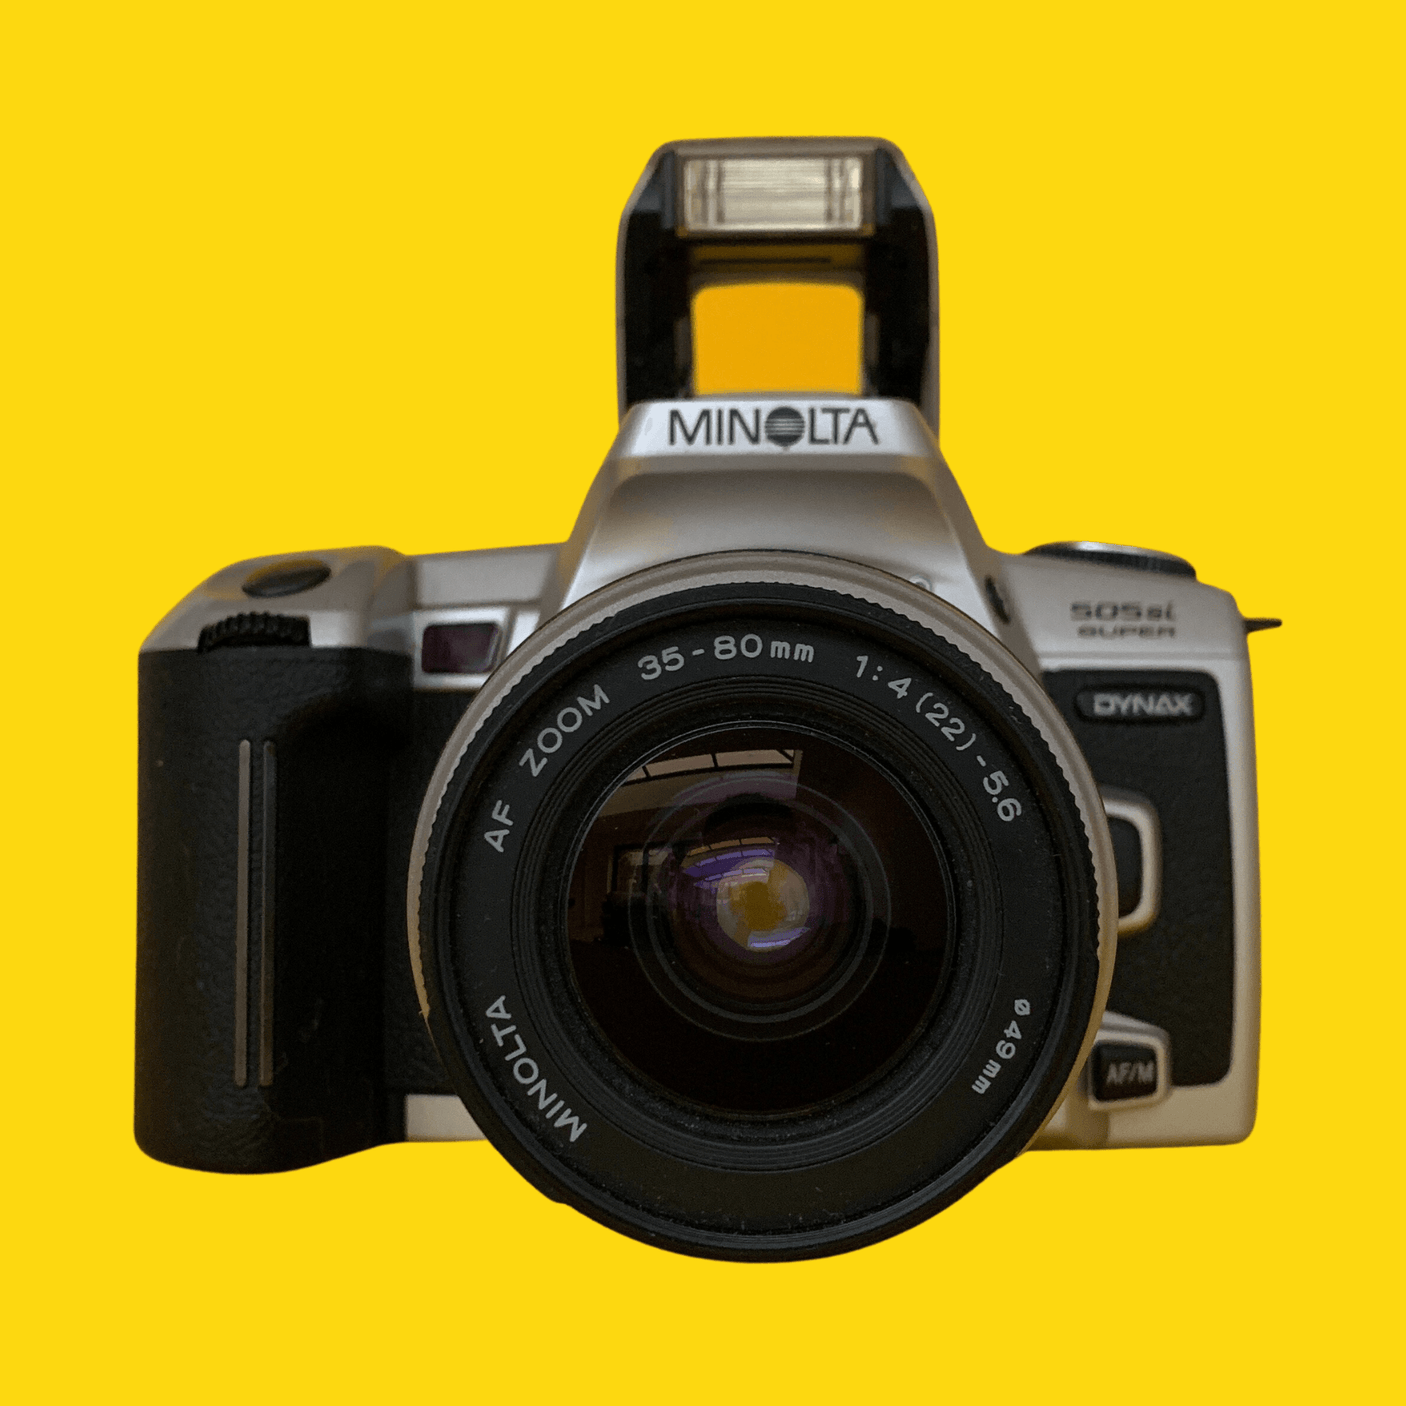 Minolta Dynax 505si Super Auto SLR 35mm Film Camera with 35mm - 80mm Lens